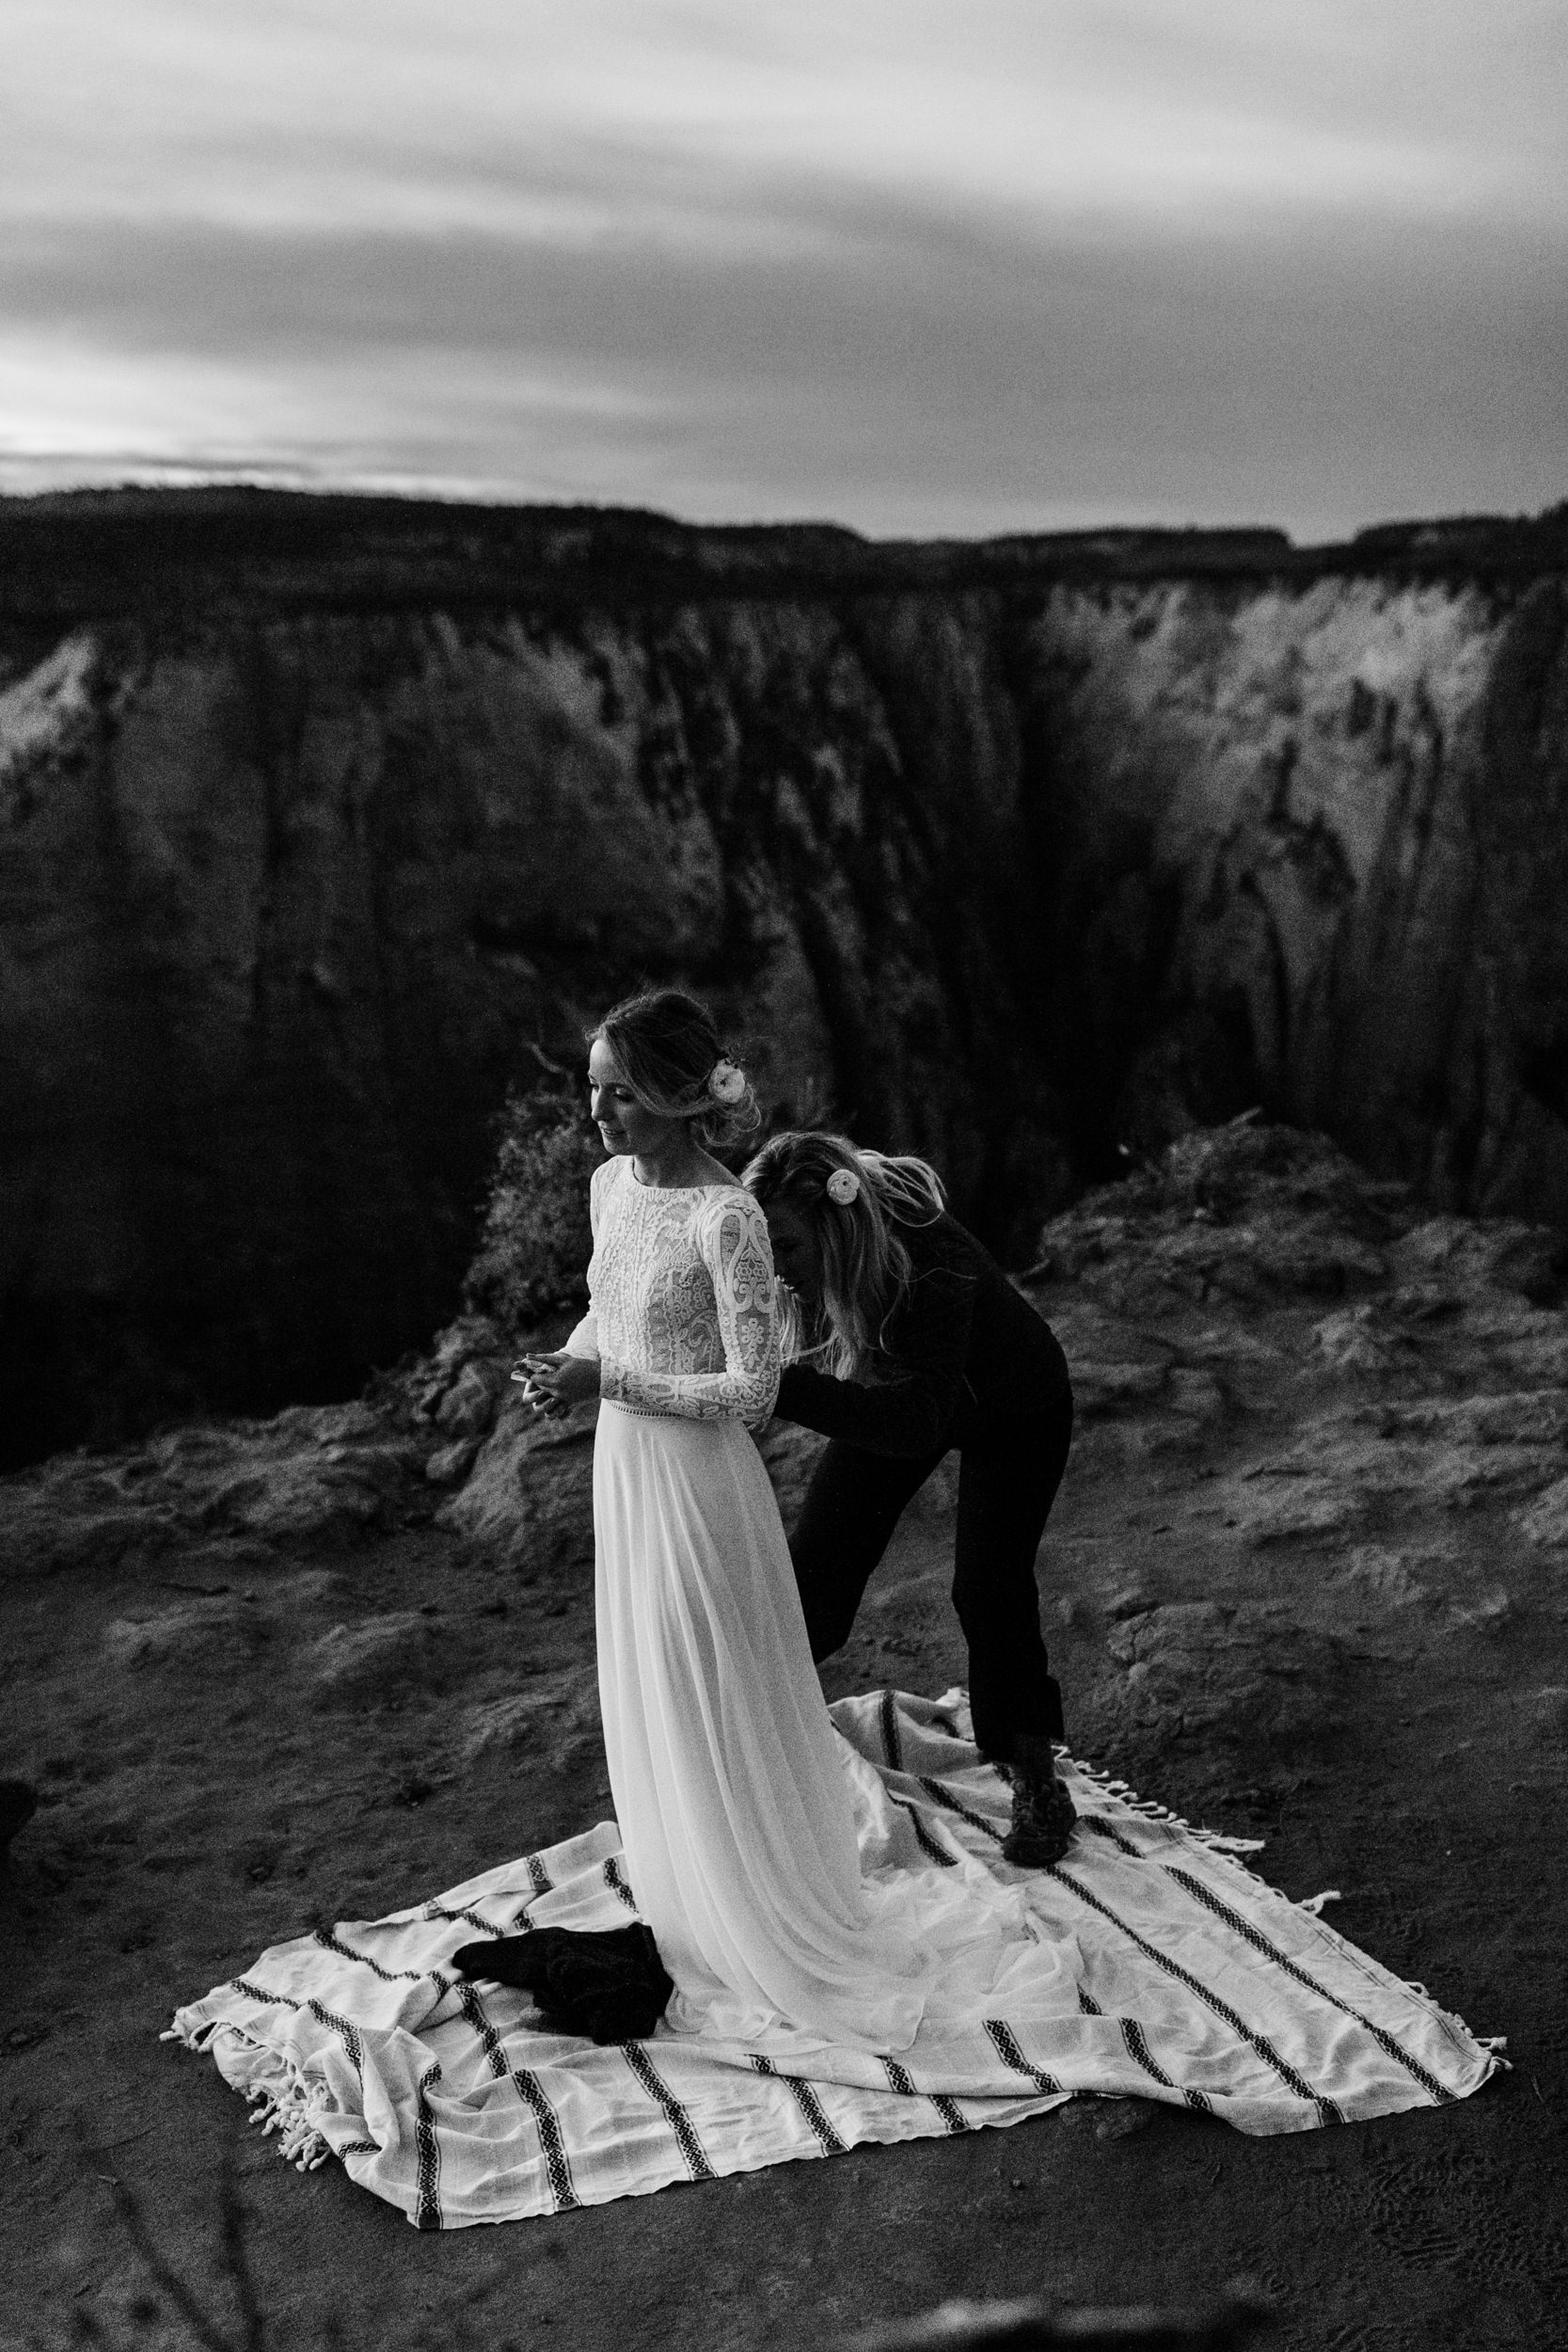 erin + marshall’s sunrise elopement ceremony overlooking zion national park | hiking wedding | utah elopement photographer | the hearnes adventure photography